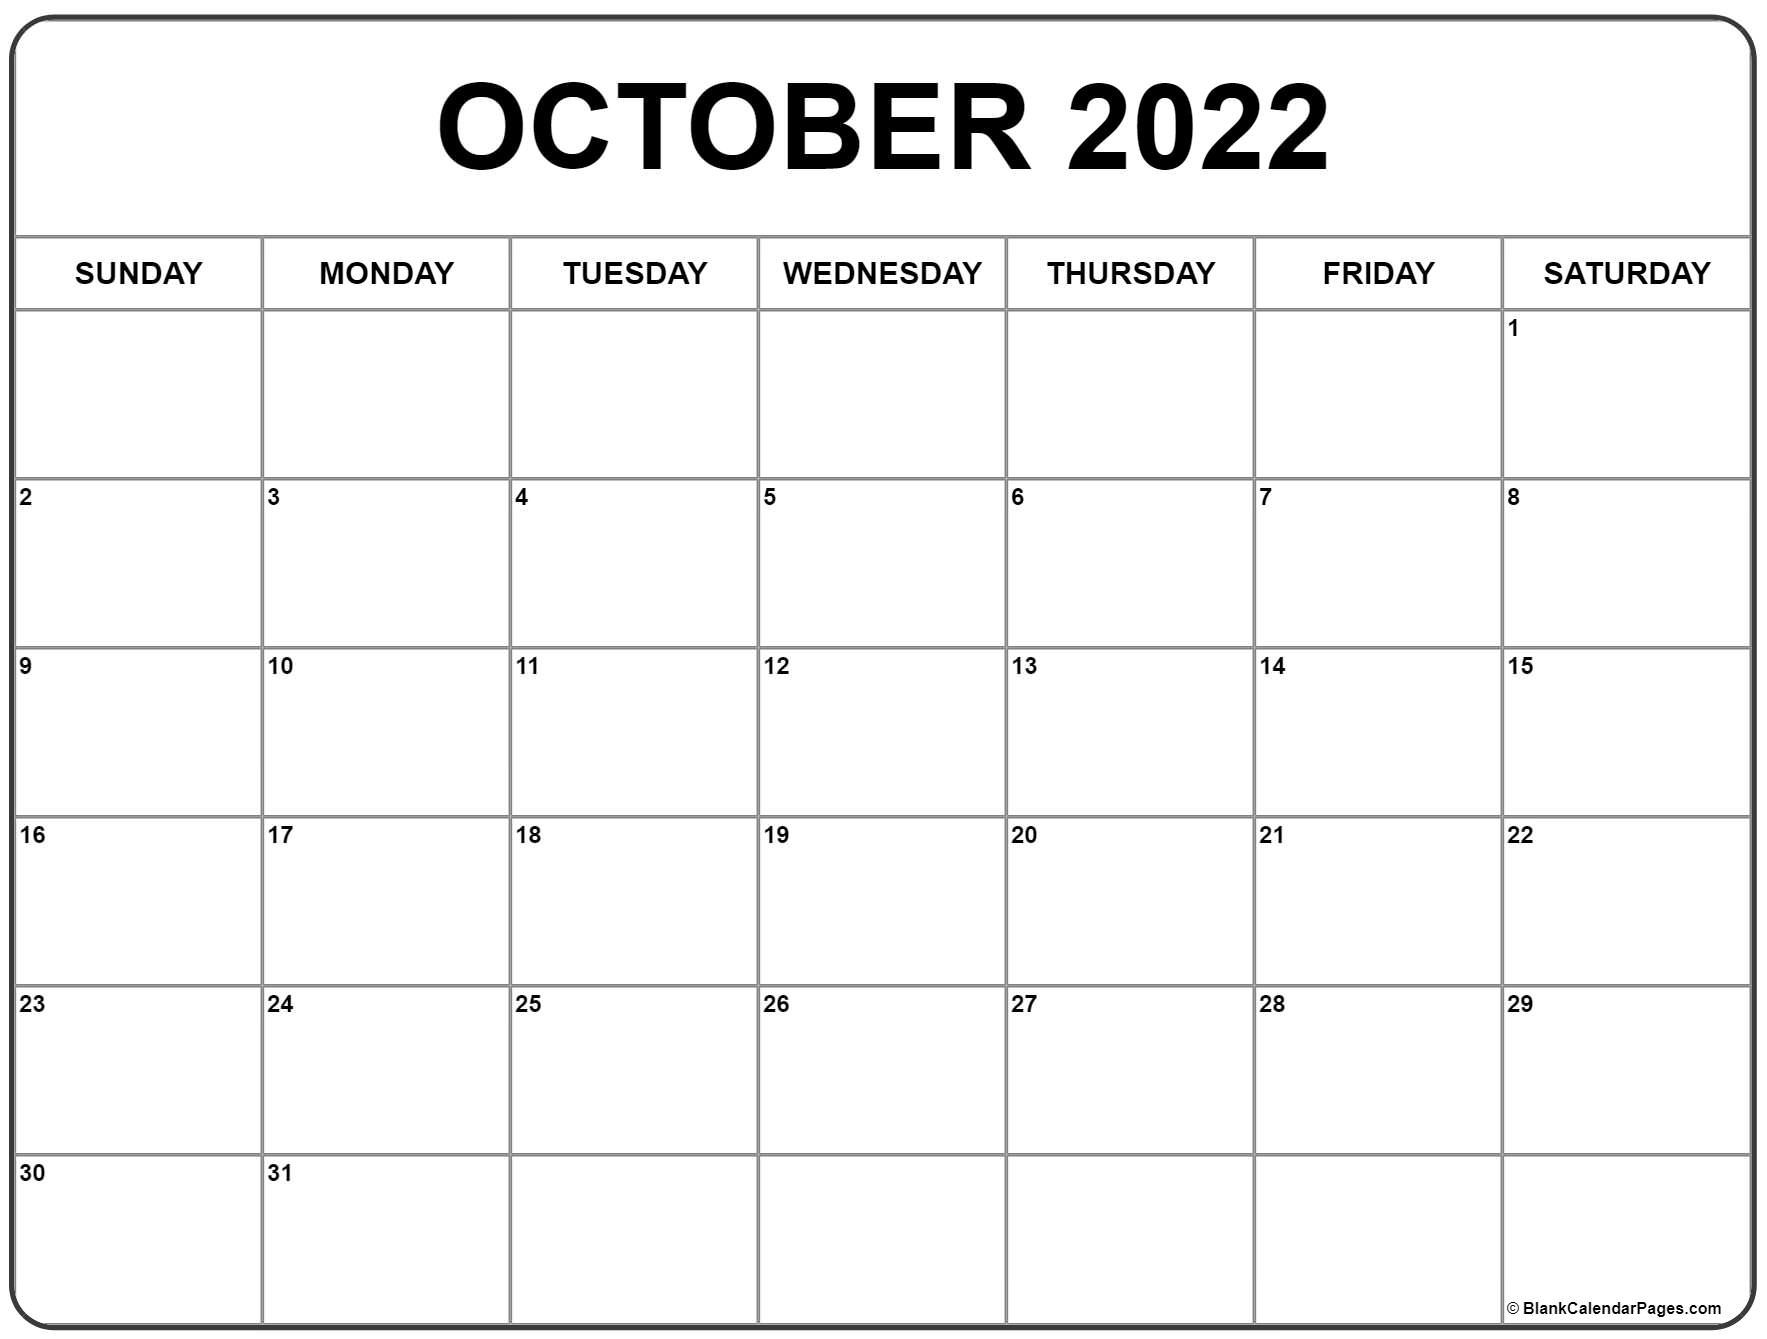 Pick October 2022 Holiday Calendar